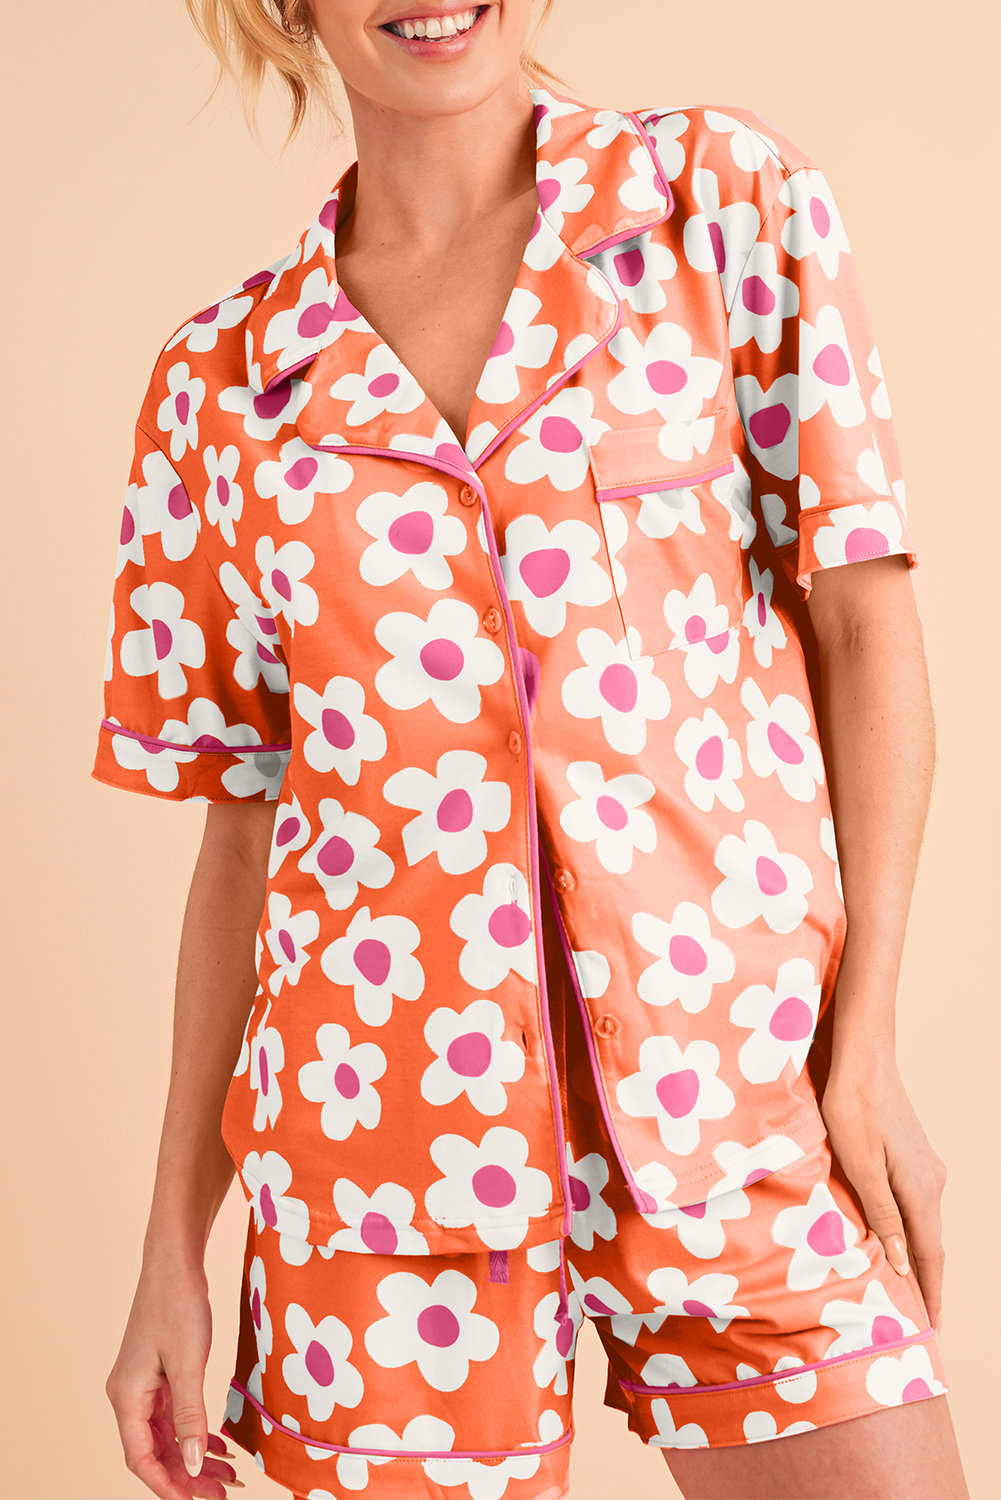 Shewin Wholesale Distributor Orange Flower Print Buttoned Shirt and Drawstring Waist PAJAMA Set